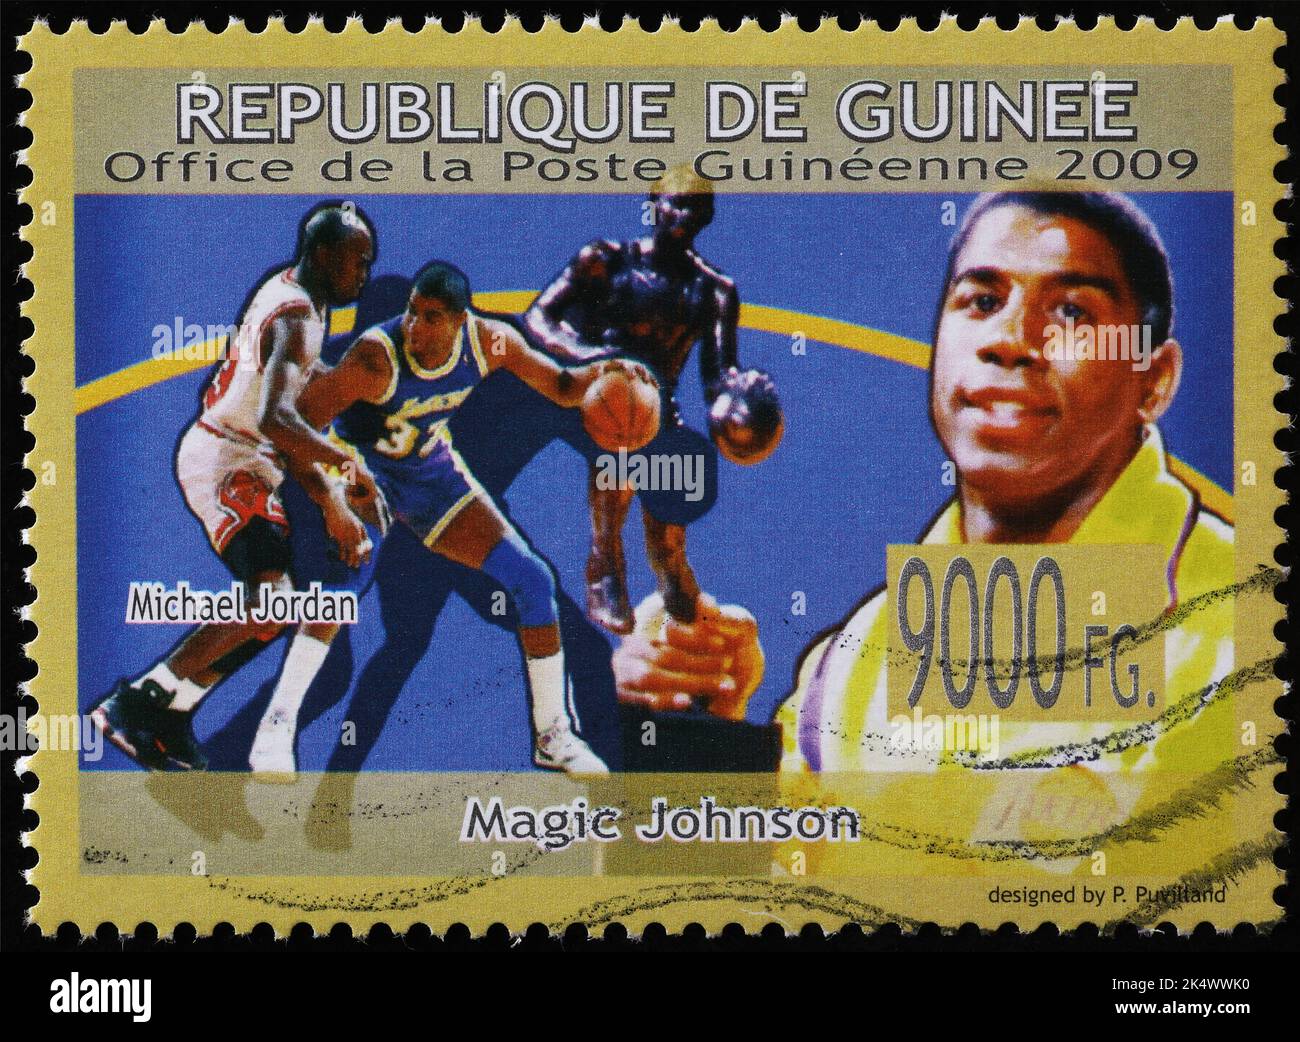 Magic Johnson and Michael Jordan on postage stamp Stock Photo